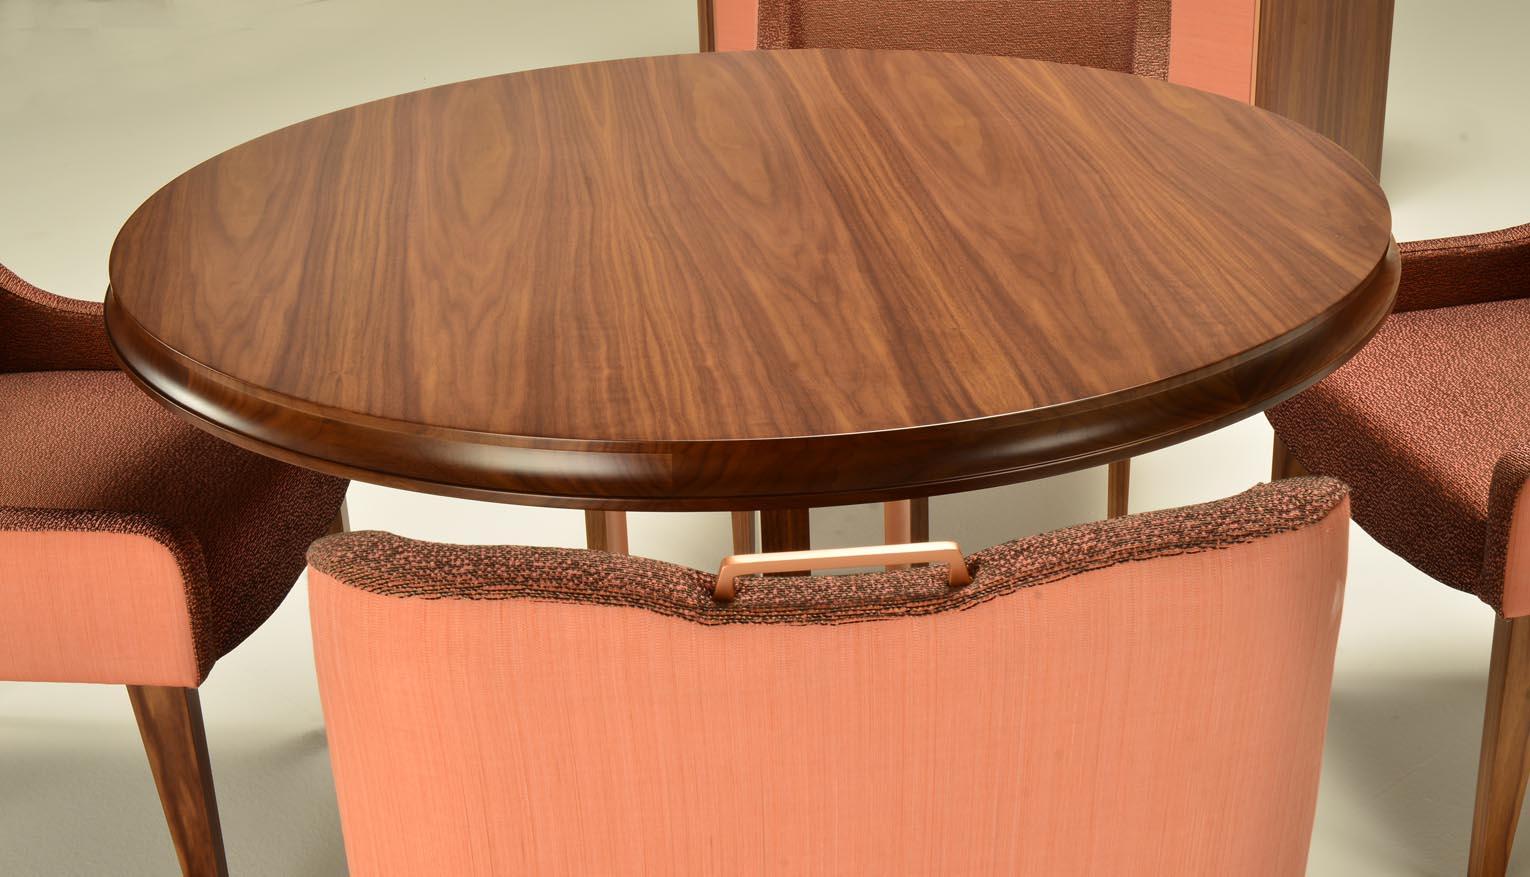 Nosh - Dining table in Black American Walnut matt finish, rose gold metallic finish on internal part of legs.
cm. 120Ø*76h.
 